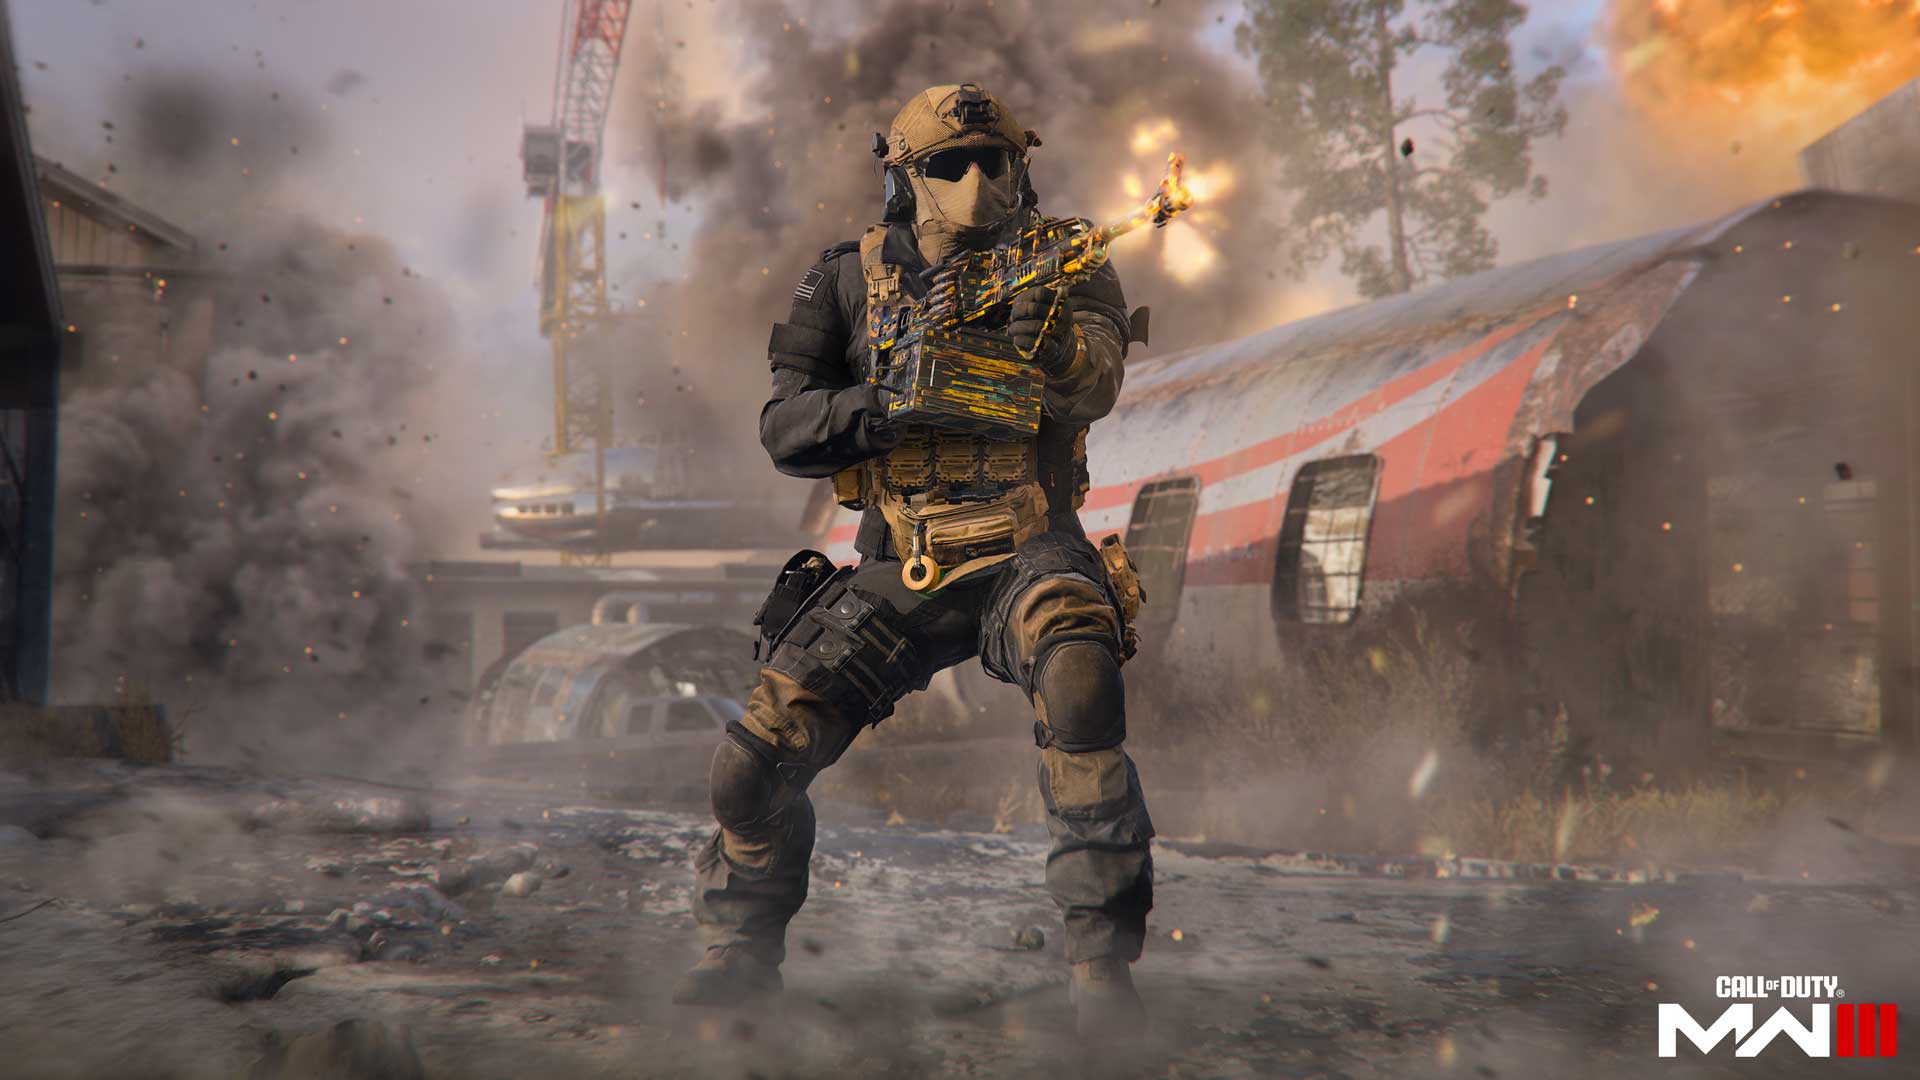 Call of Duty: Modern Warfare III Campaign 4K Gameplay Trailer